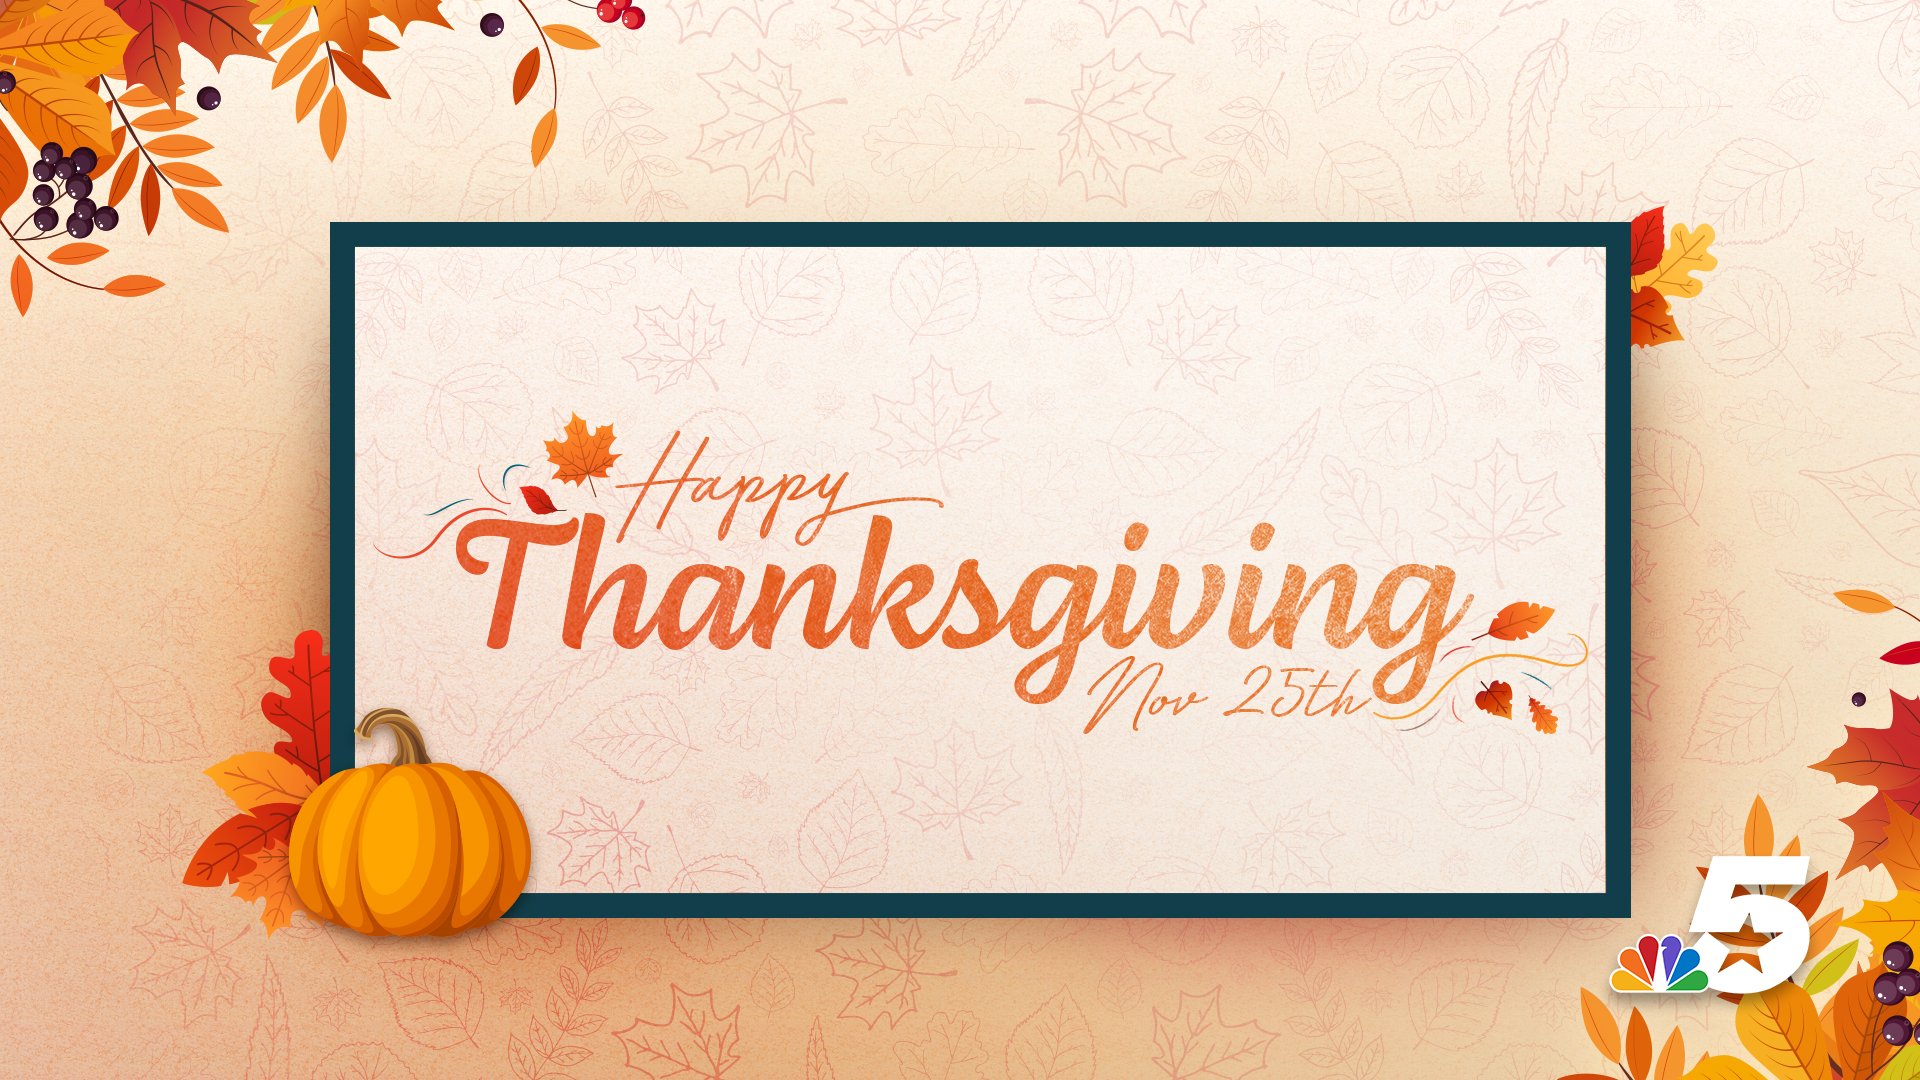 NBCDFW Social - Happy Thanksgiving 